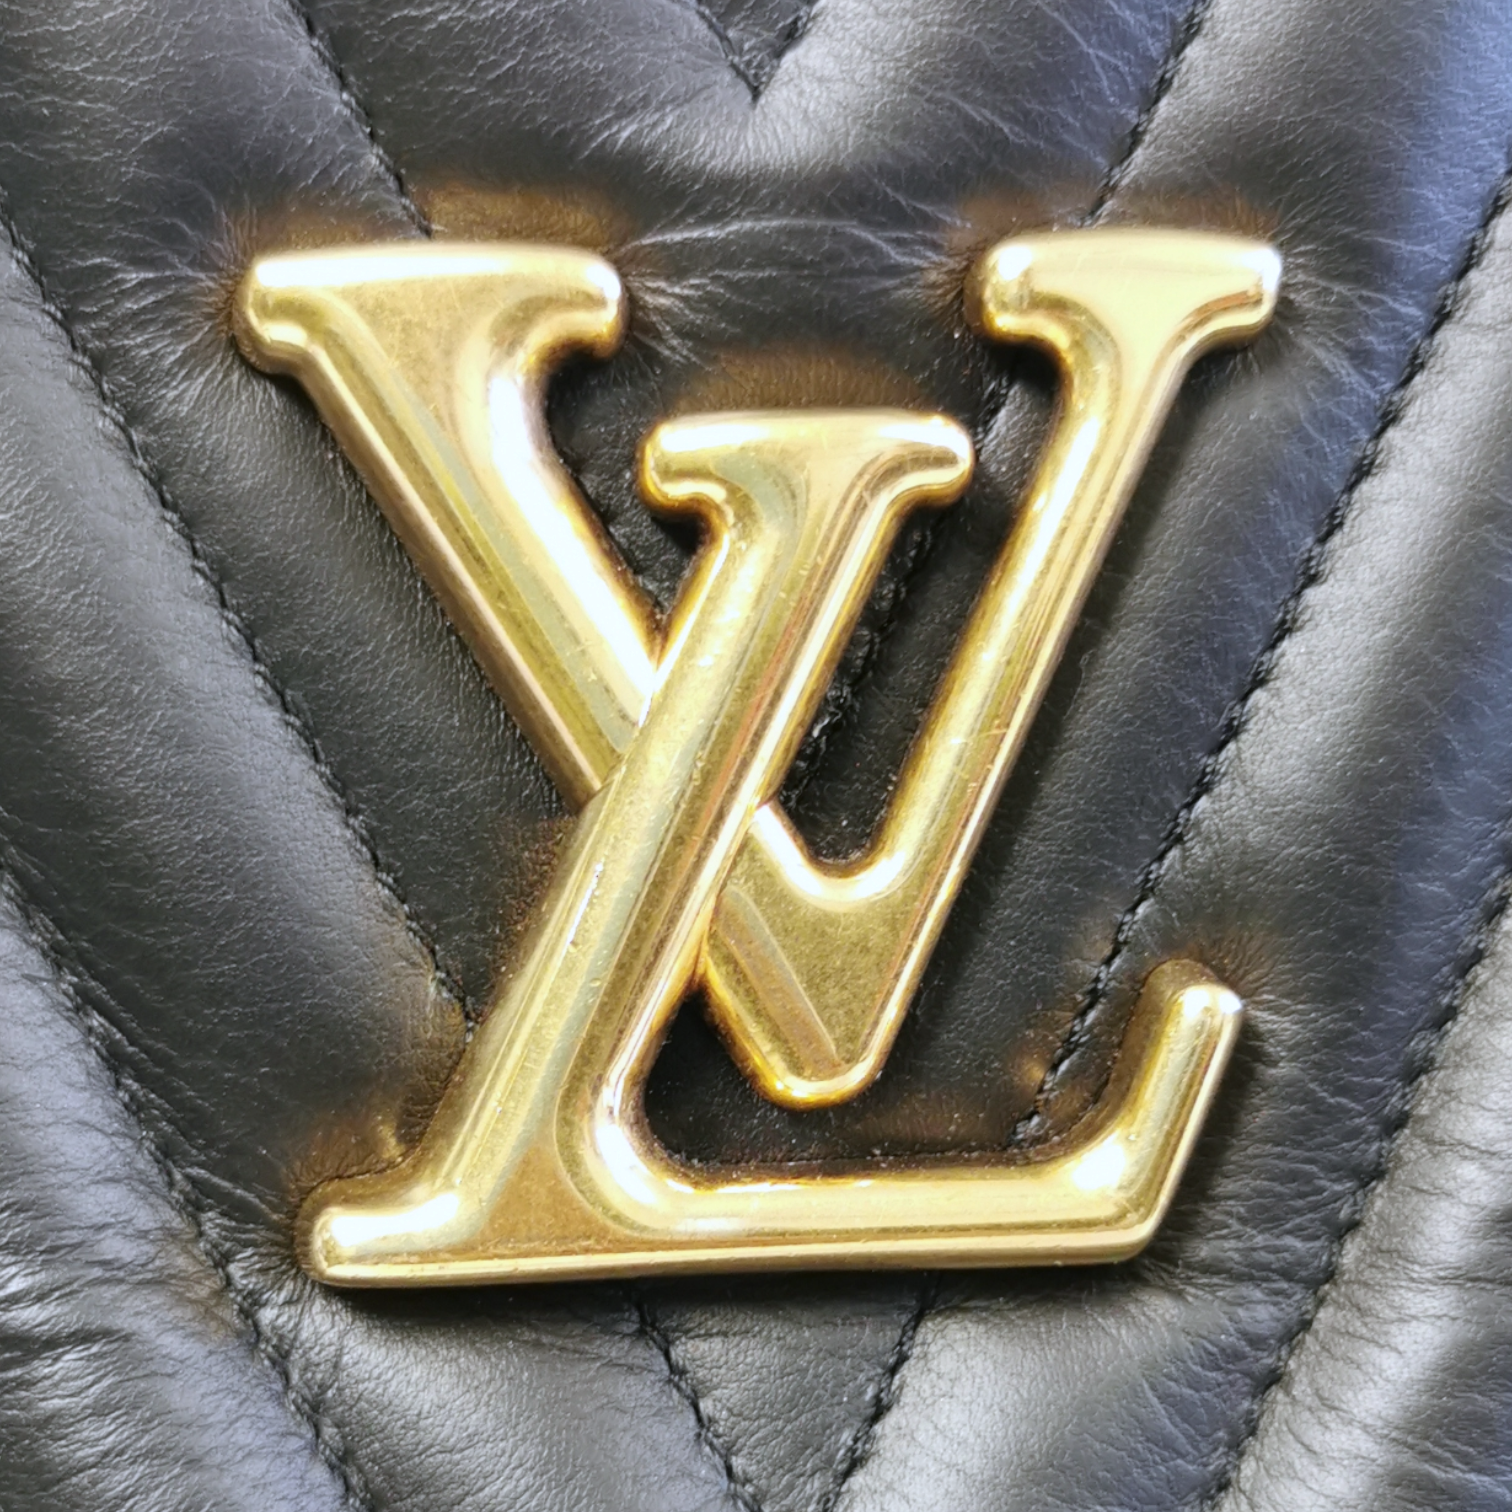 Louis Vuitton New Wave Chain Tote Sac